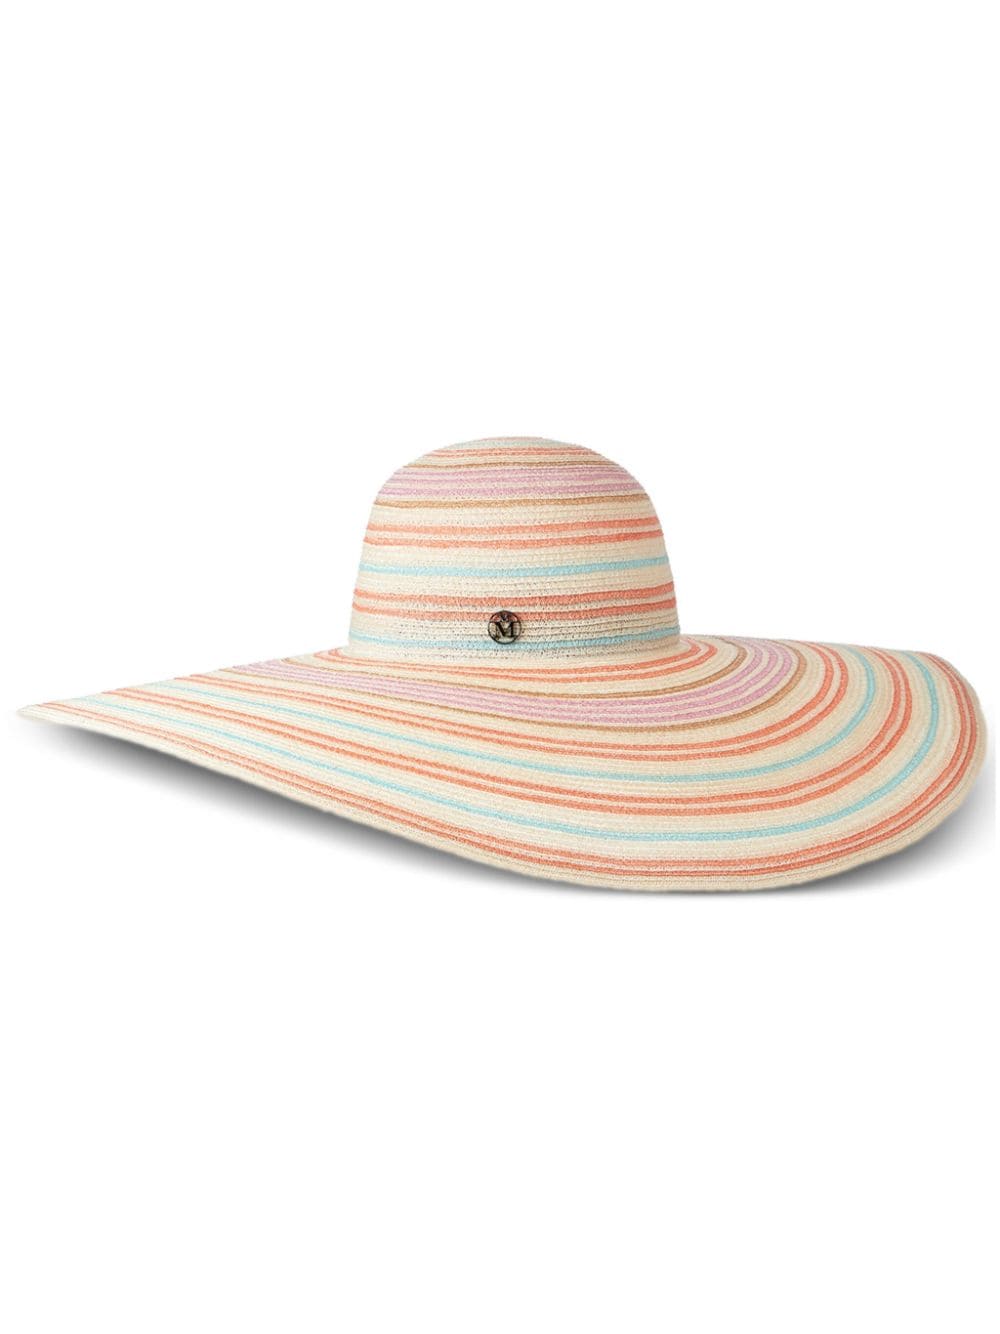 Blanche striped hat